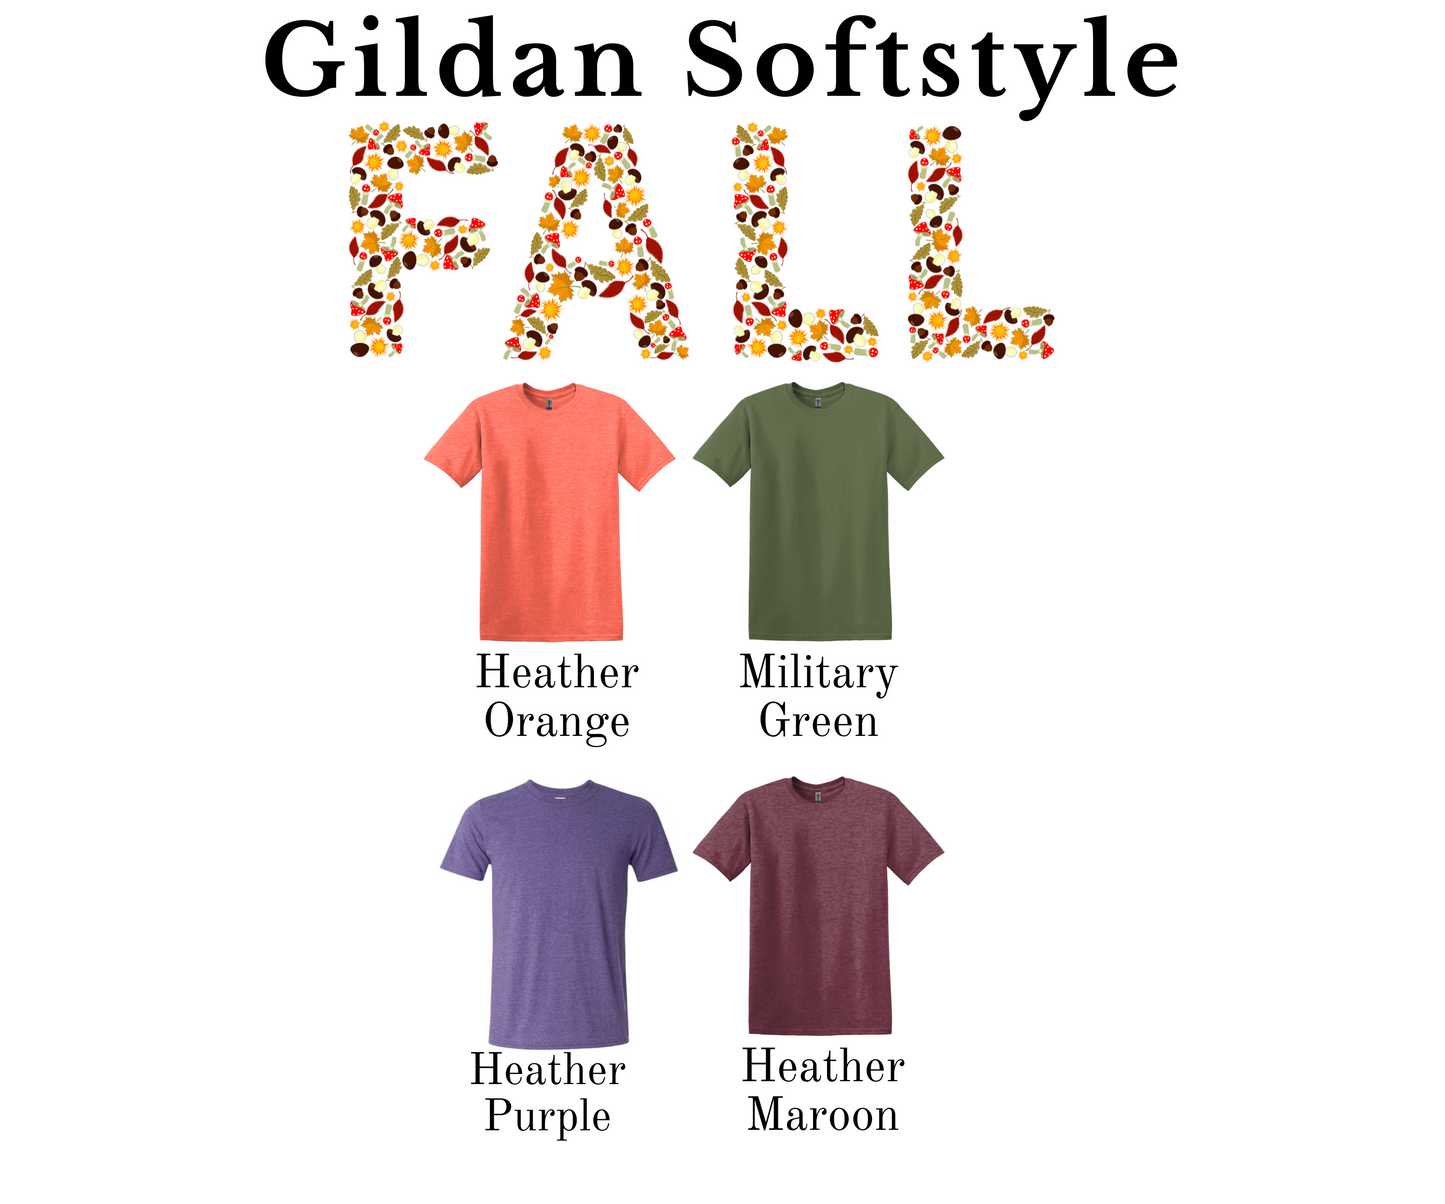 Halloween Horror Friends Gildan Softstyle T-shirt or Sweatshirt